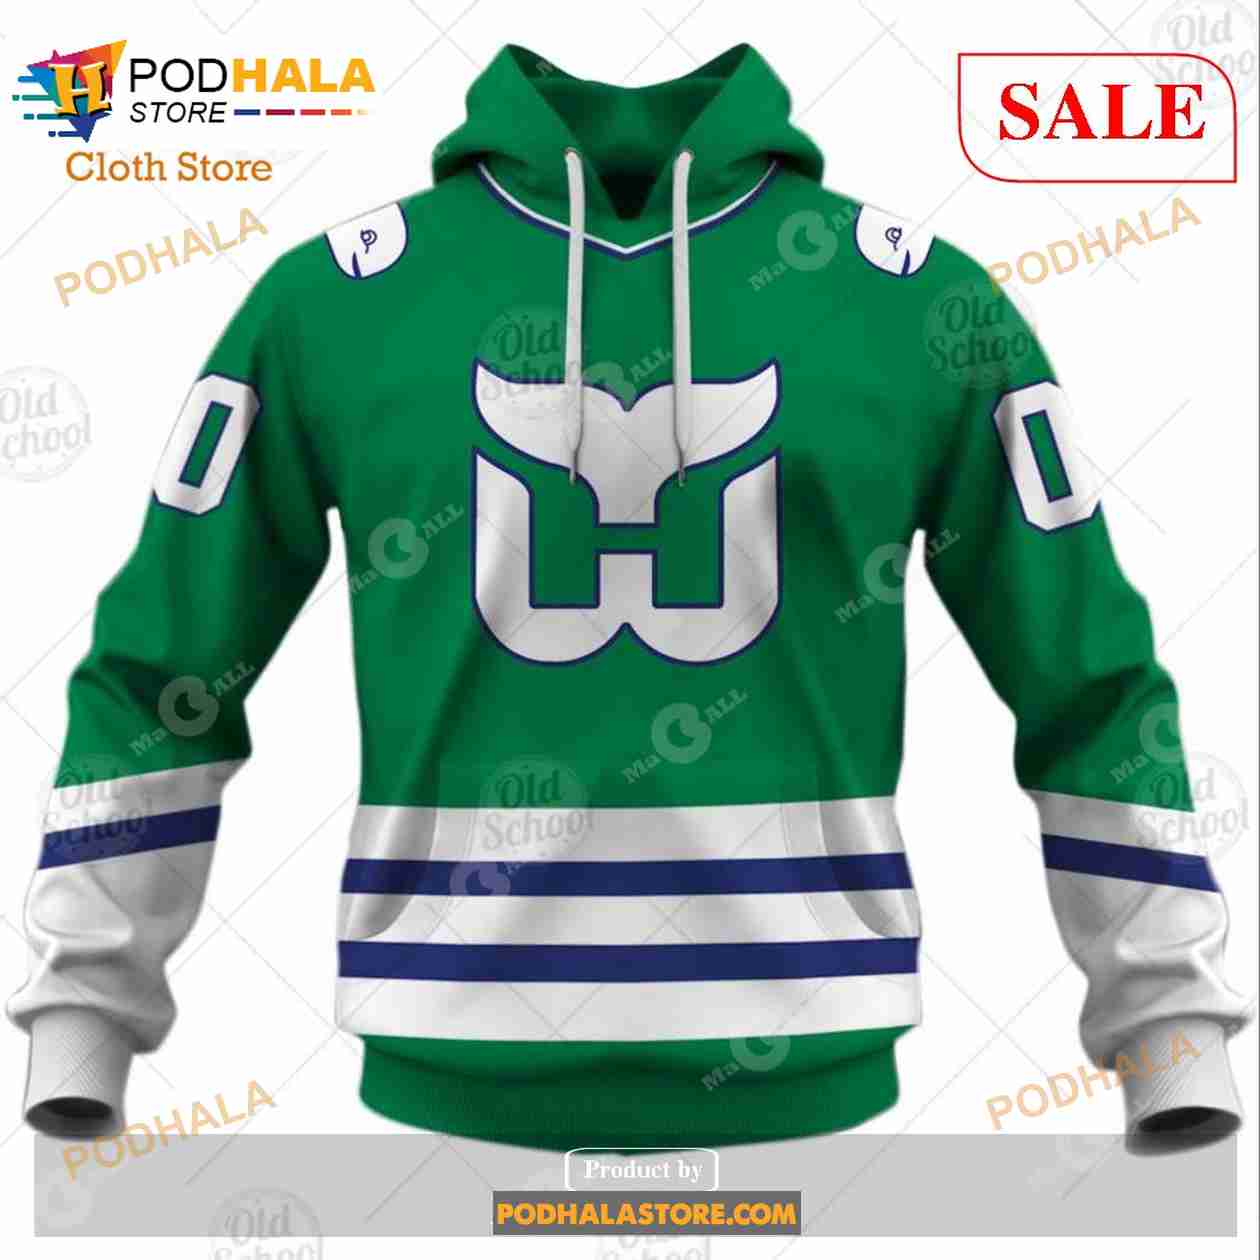 Hartford Whalers Home Uniform - National Hockey League (NHL